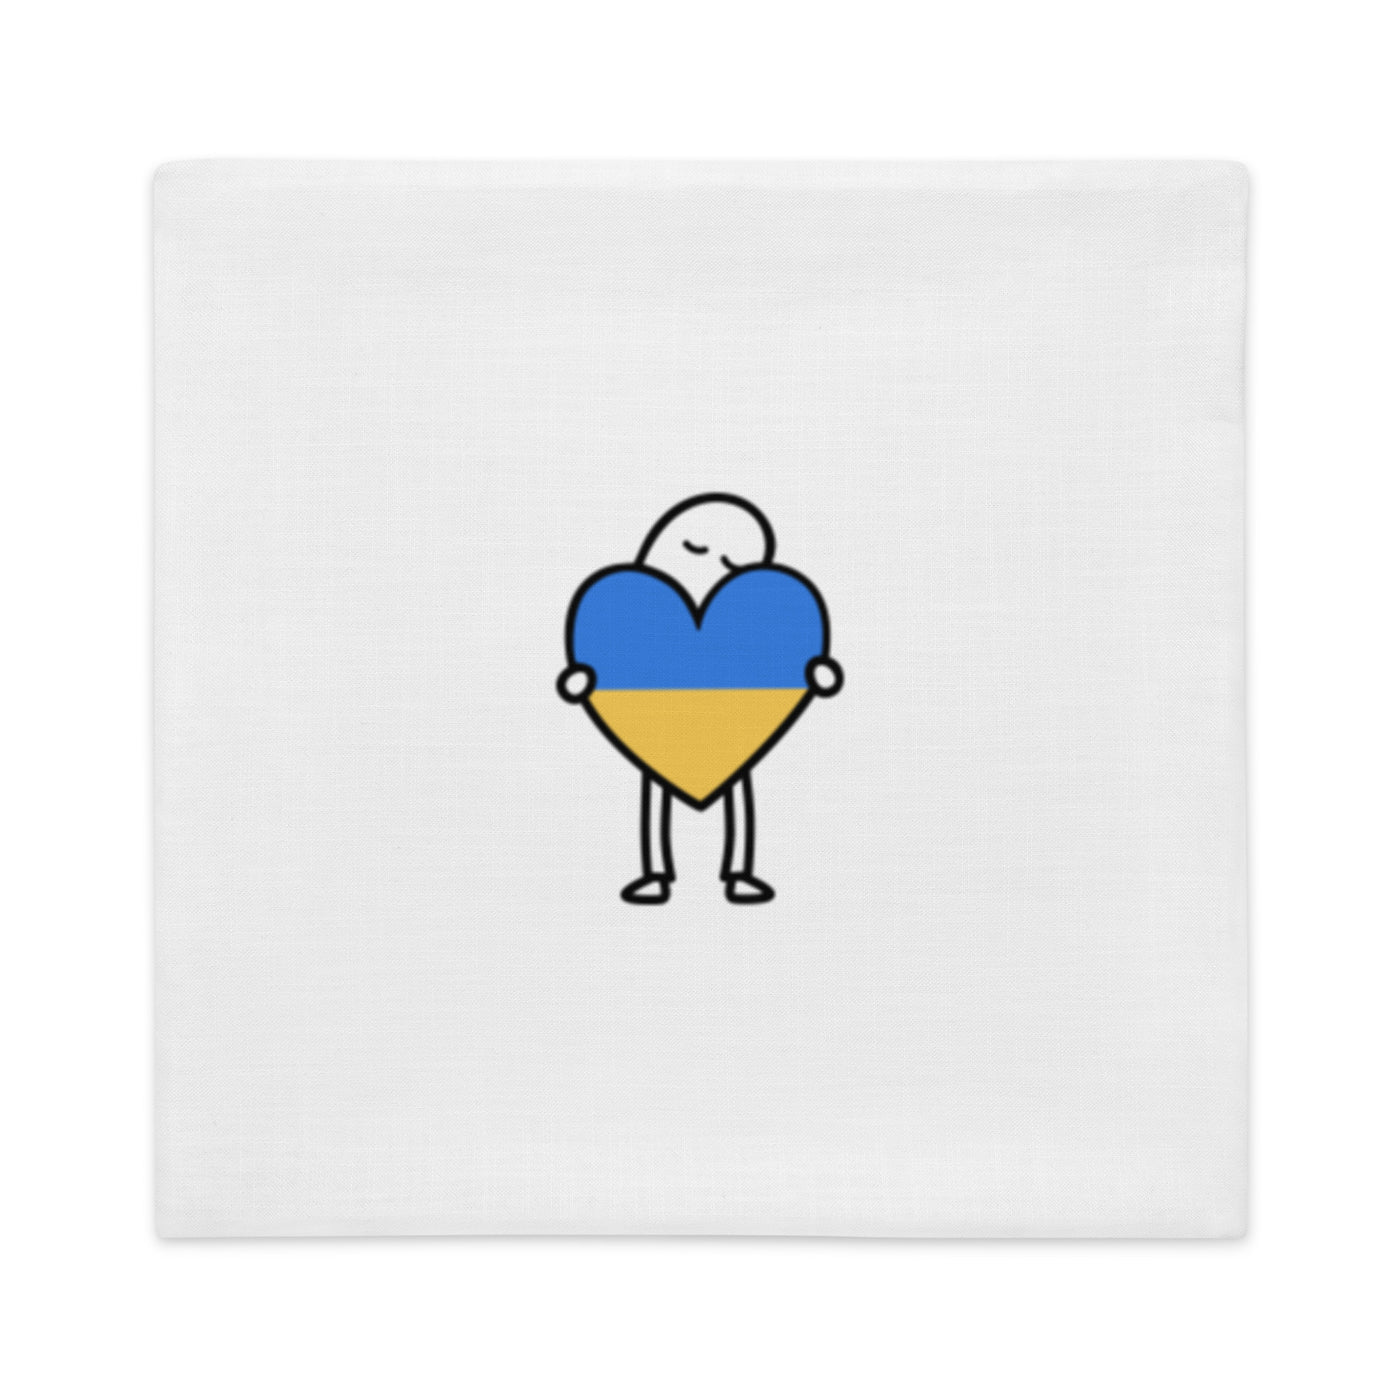 Love to Ukraine Pillow CASE